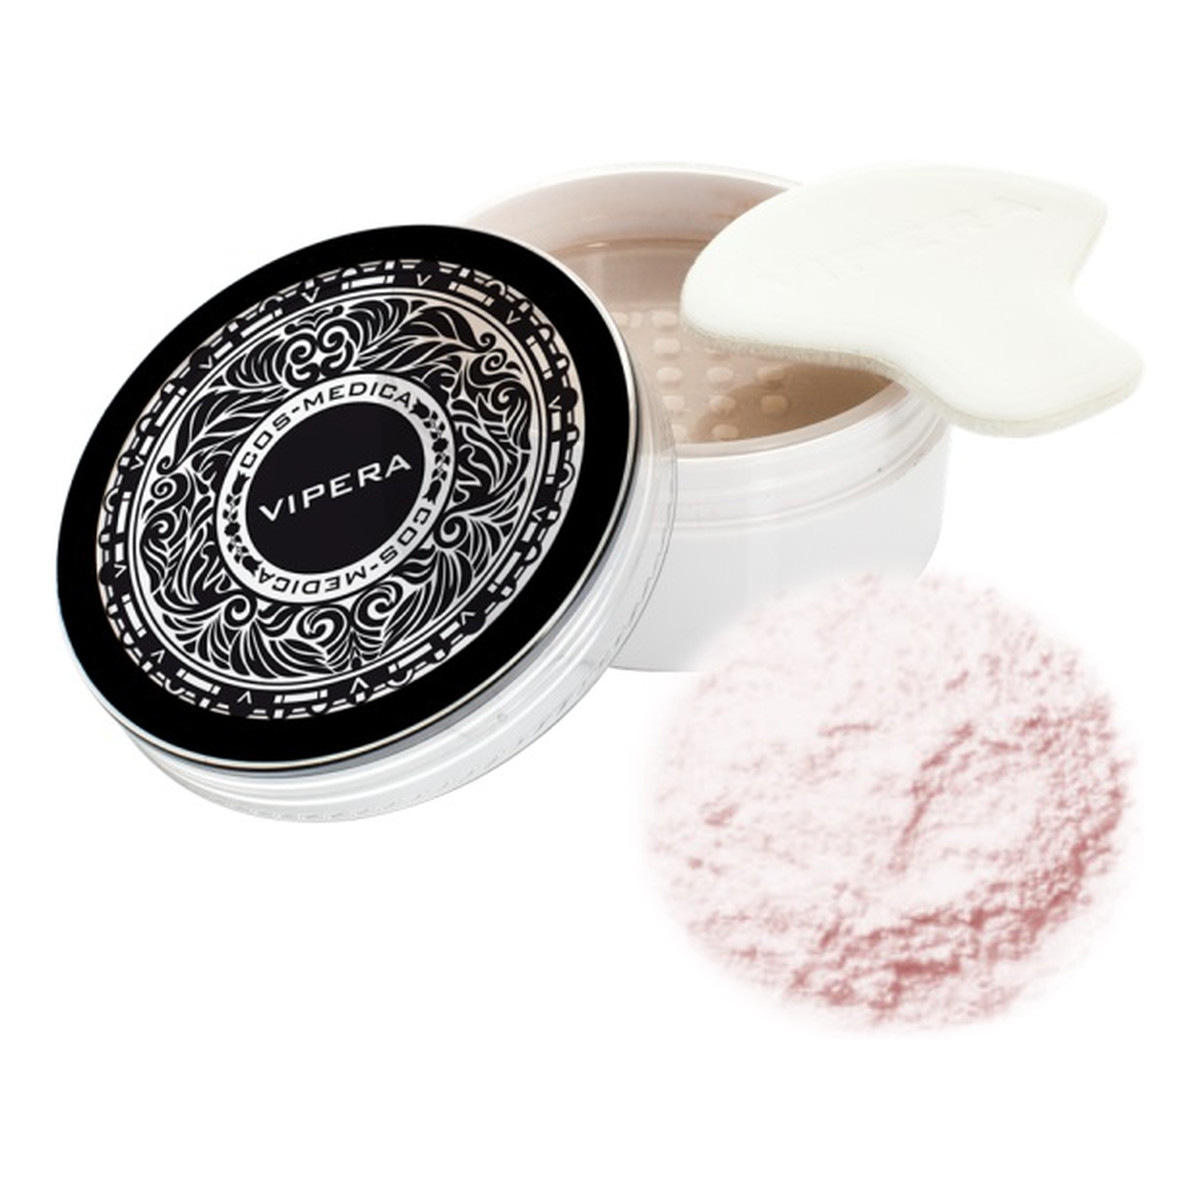 Vipera Derma Powder Anti-Aging różany puder sypki do cery dojrzałej Transparentny 11g